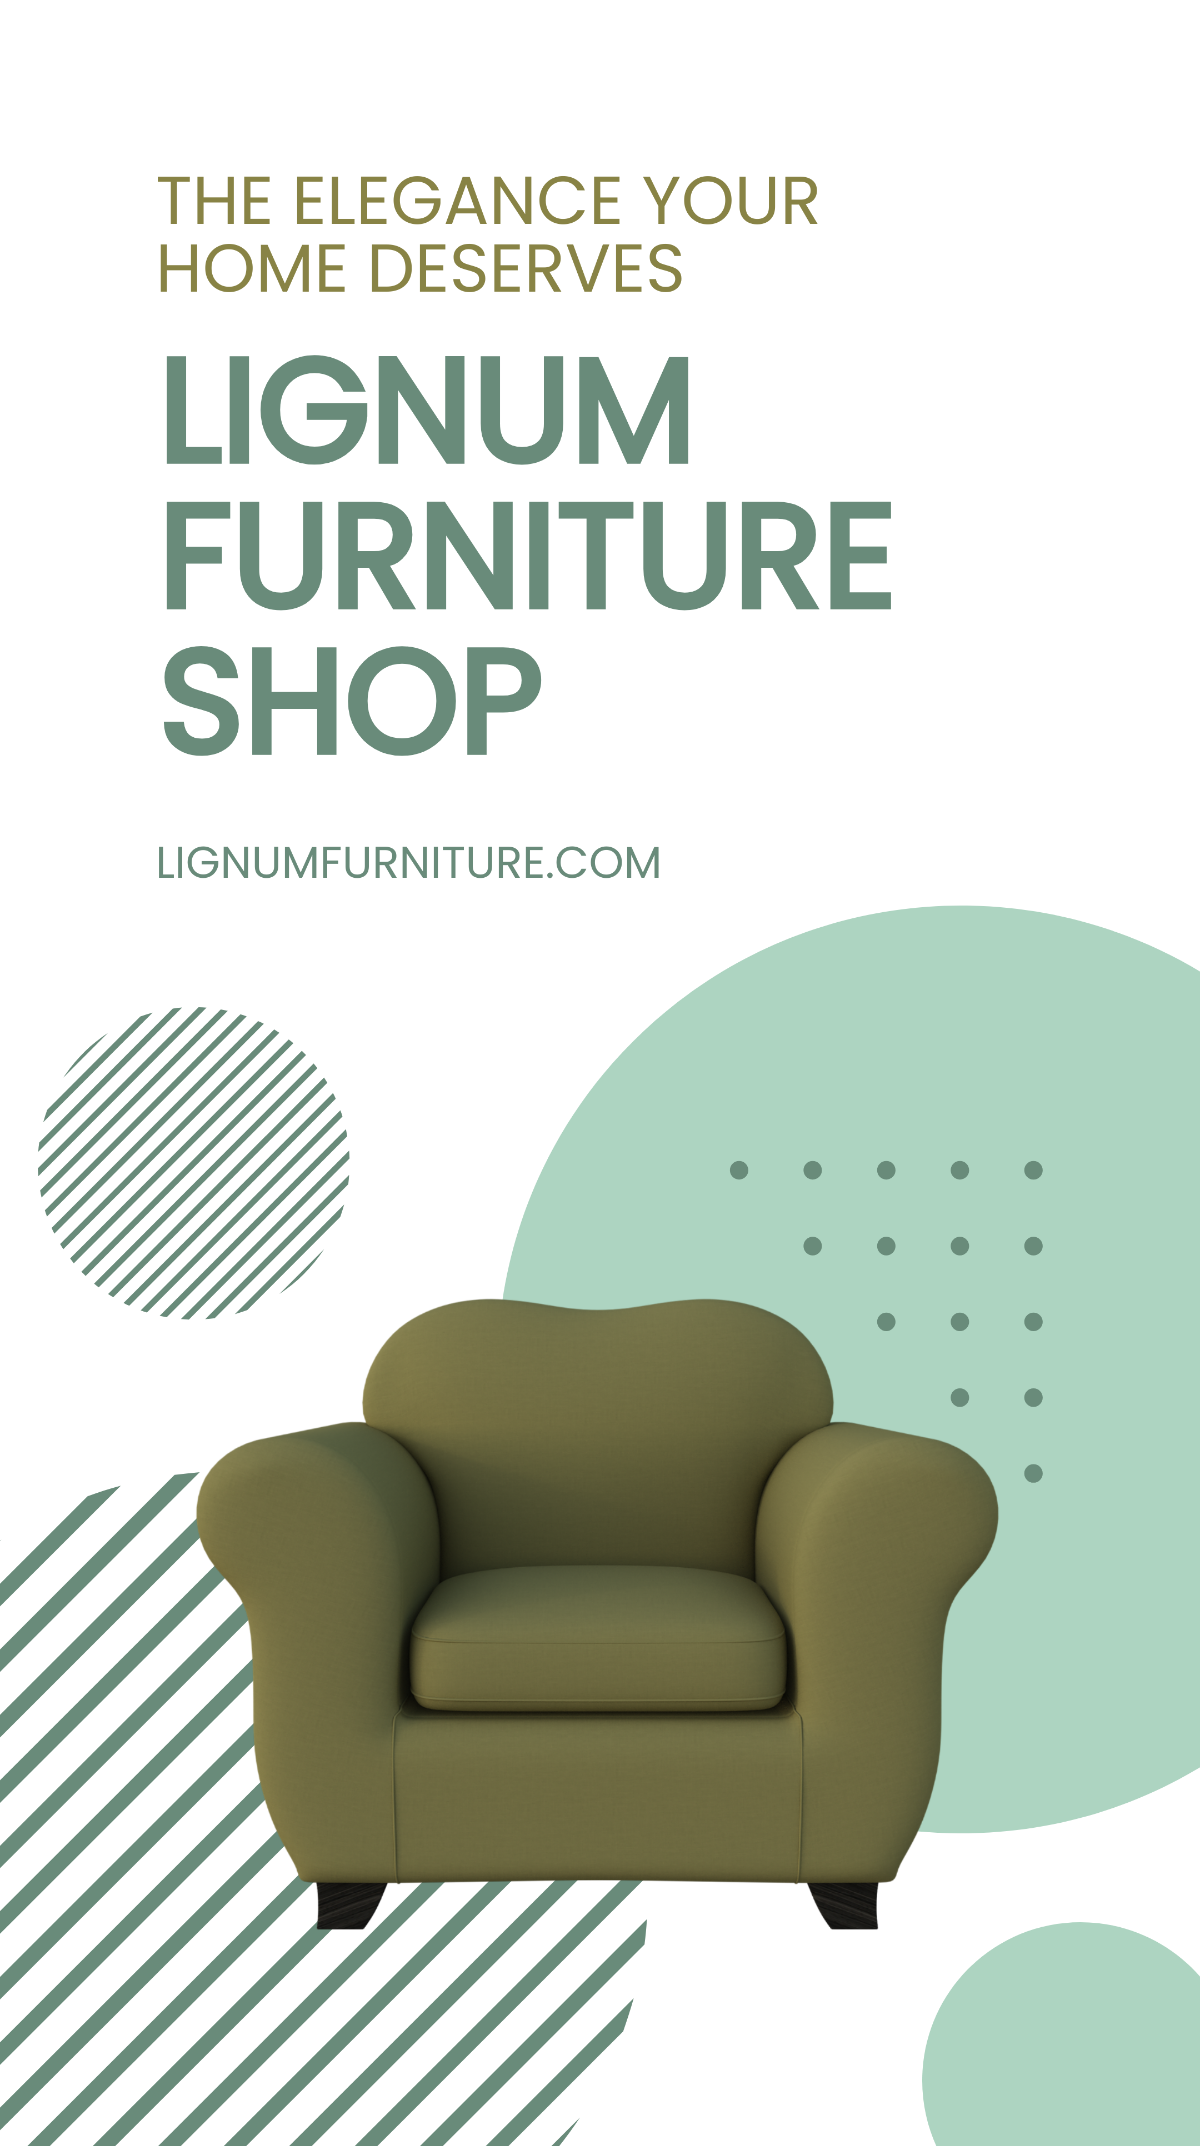 Online furniture sample store